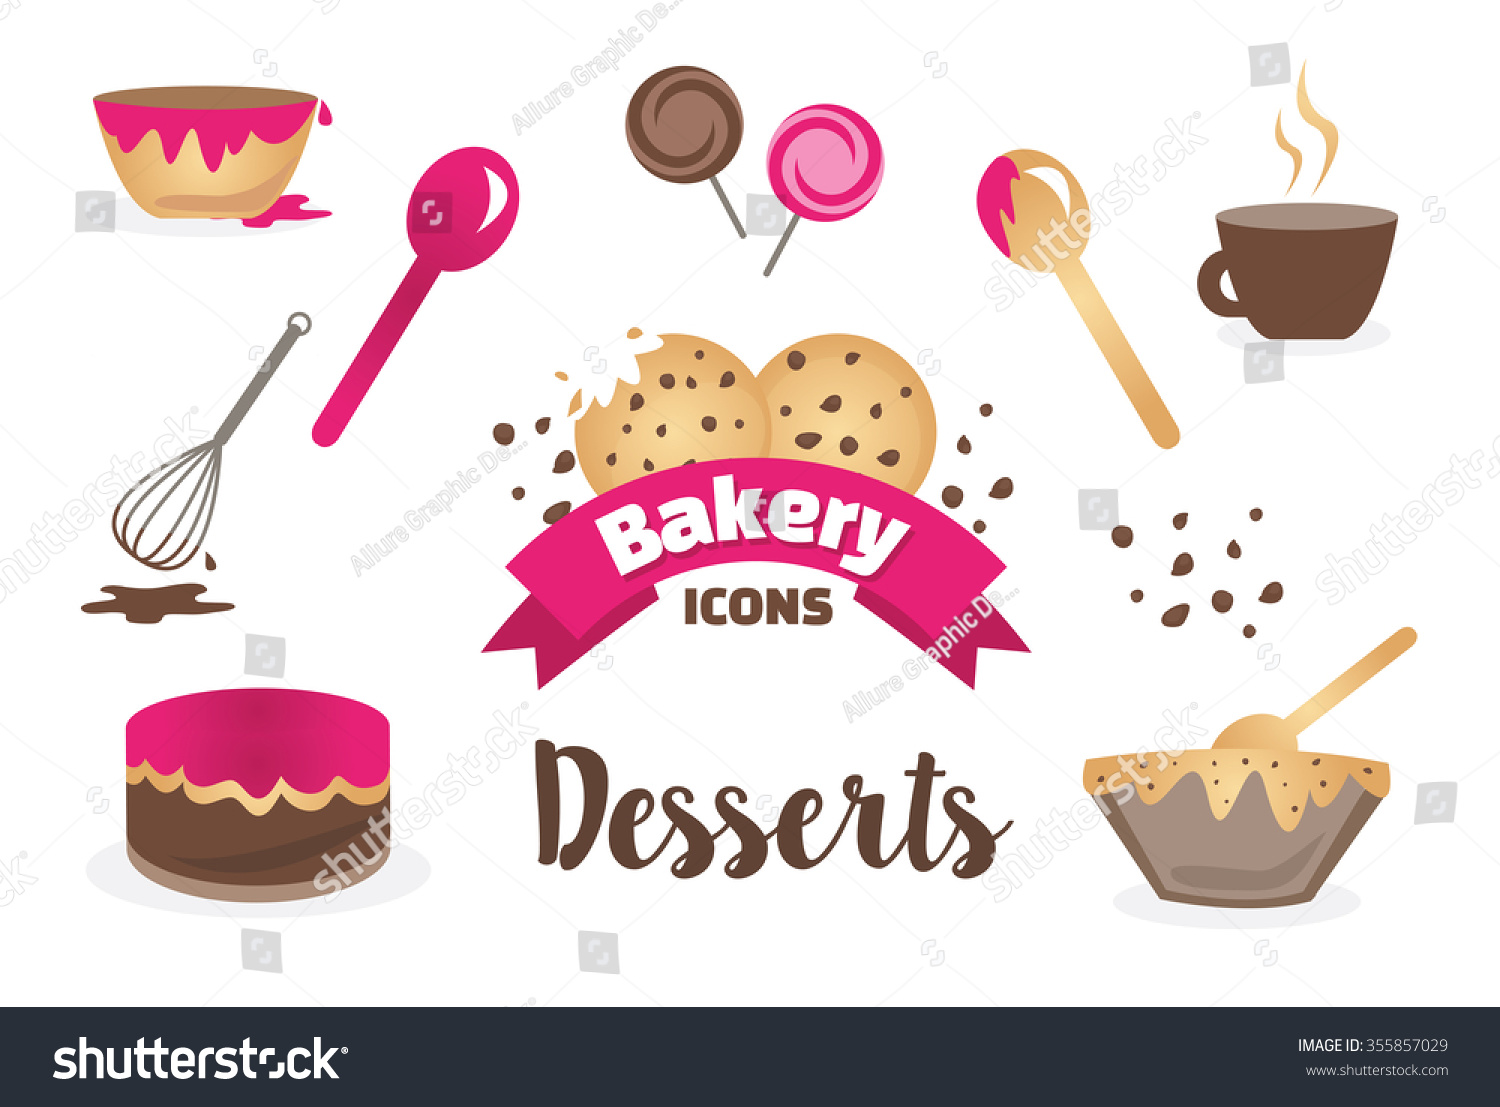 SVG of Dessert Bakery Icons svg